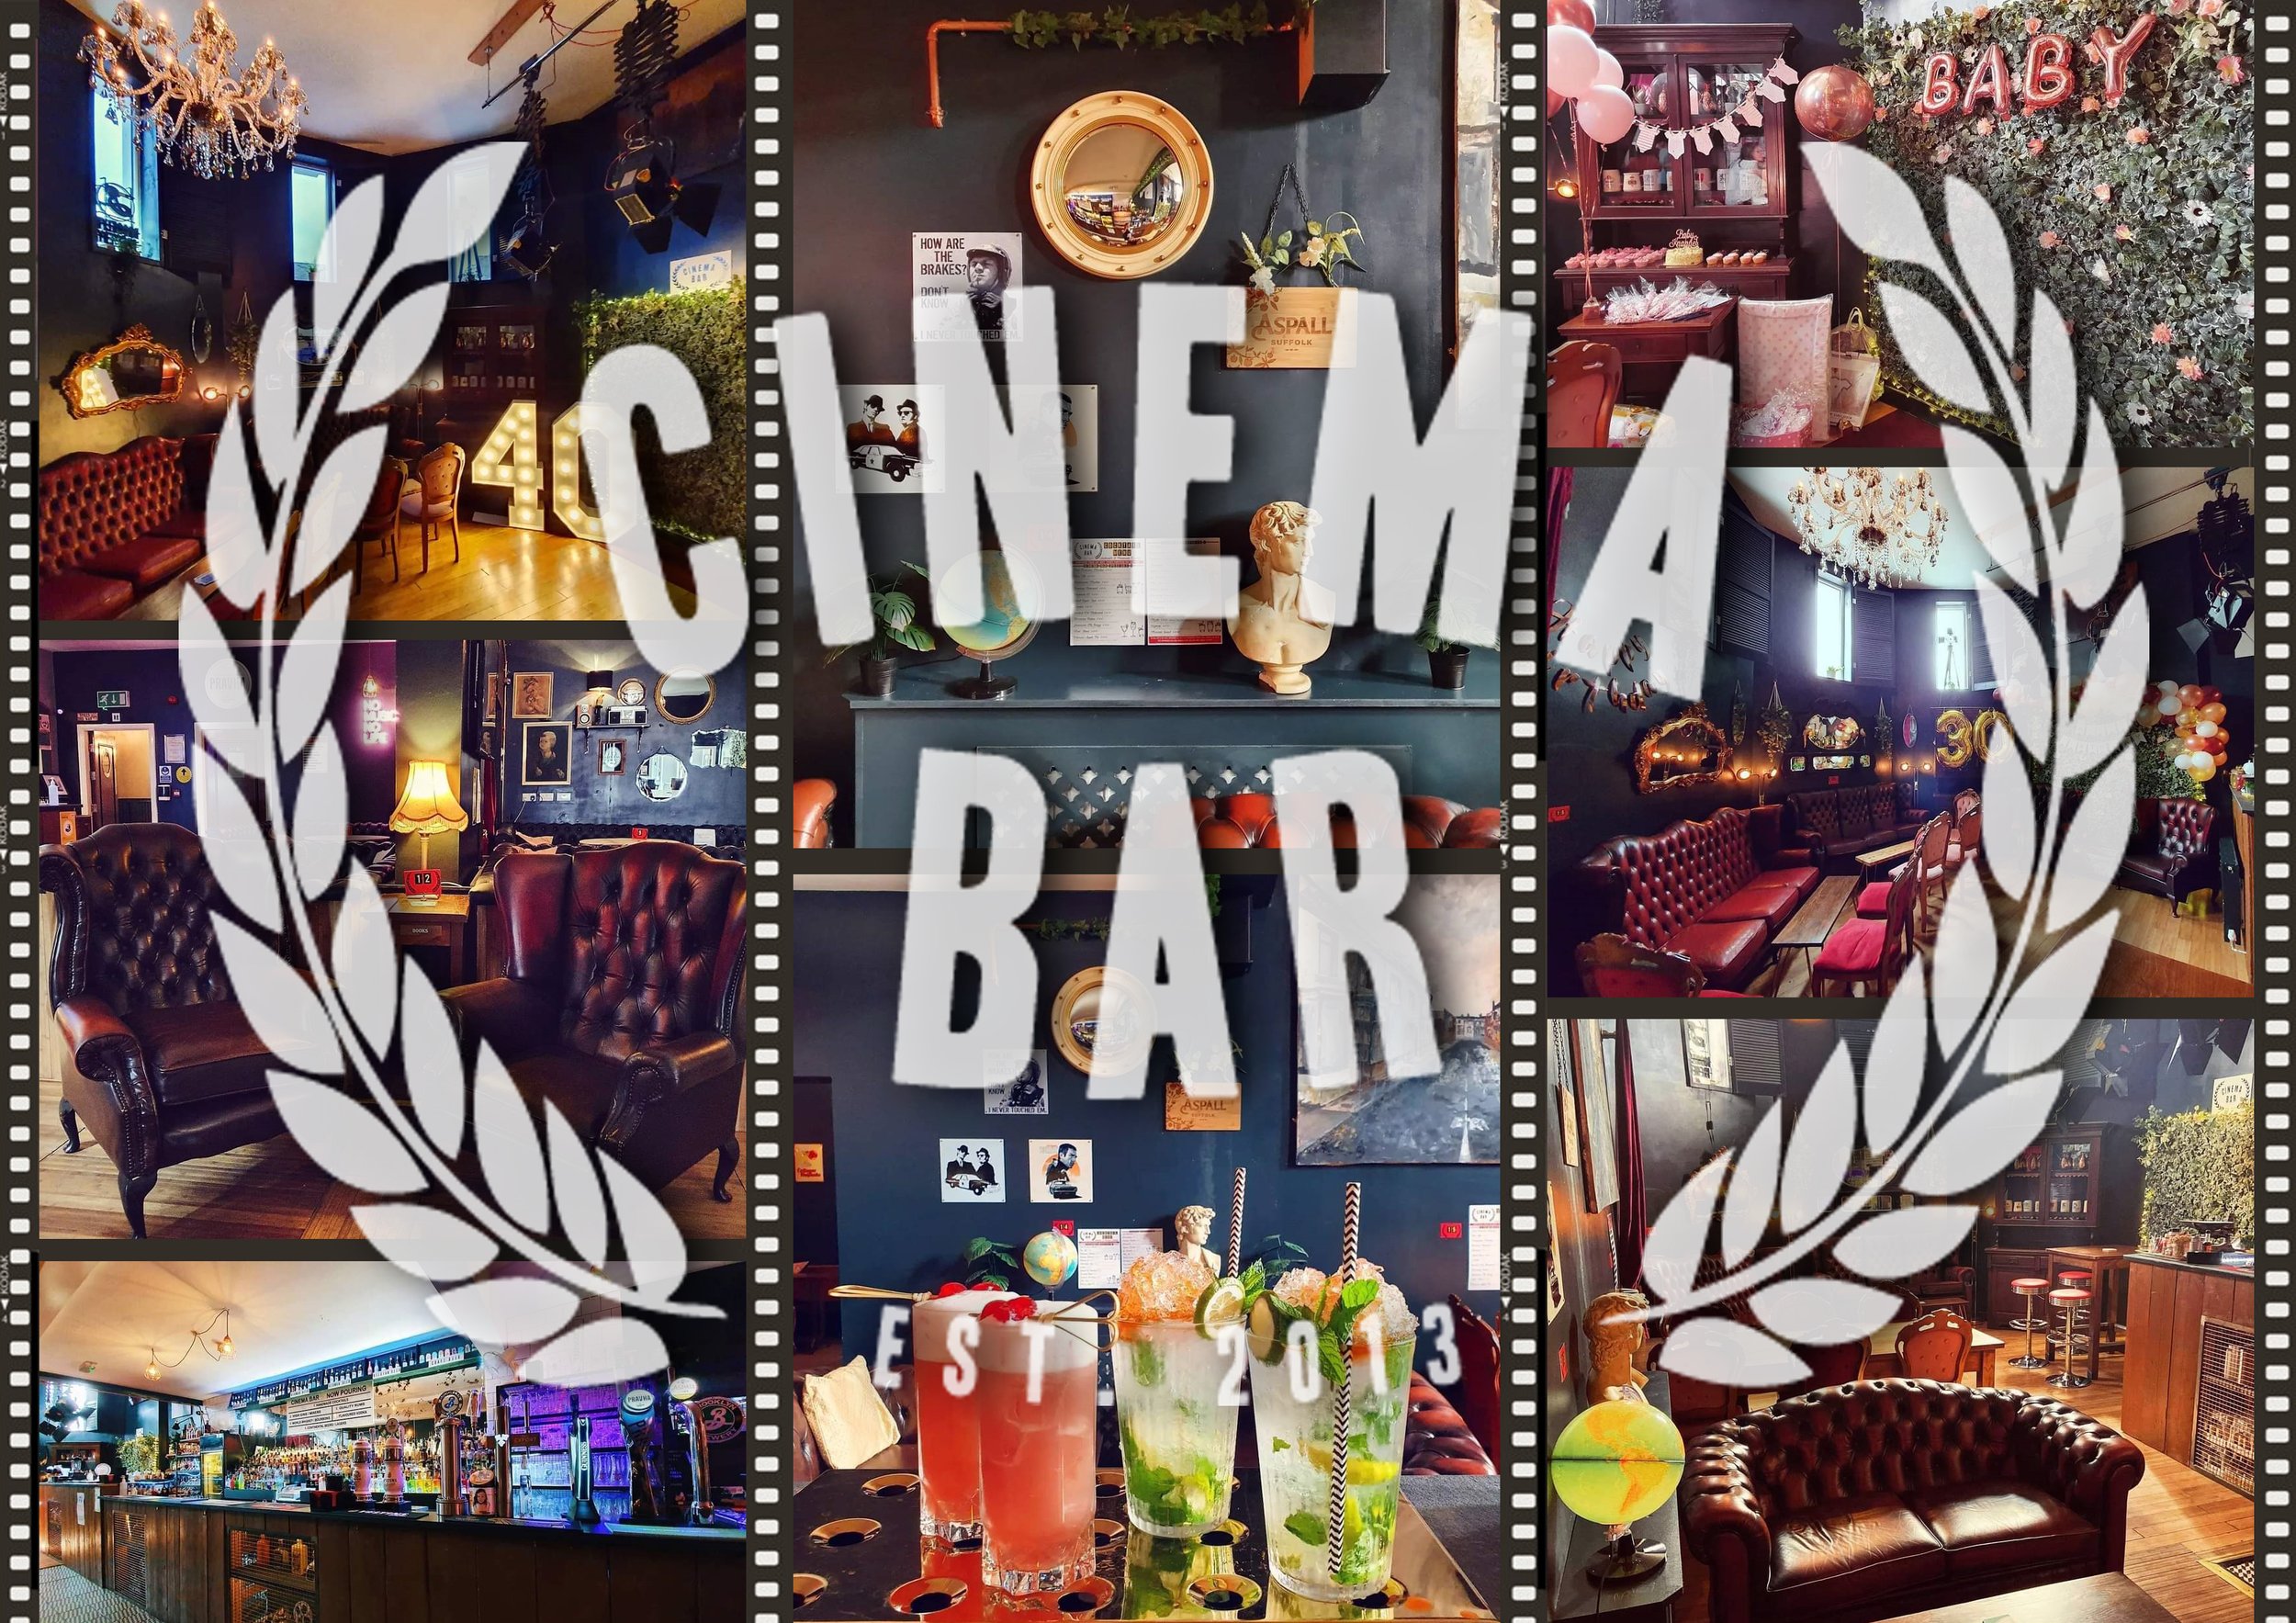 Cinema Bar Photo poster.jpg